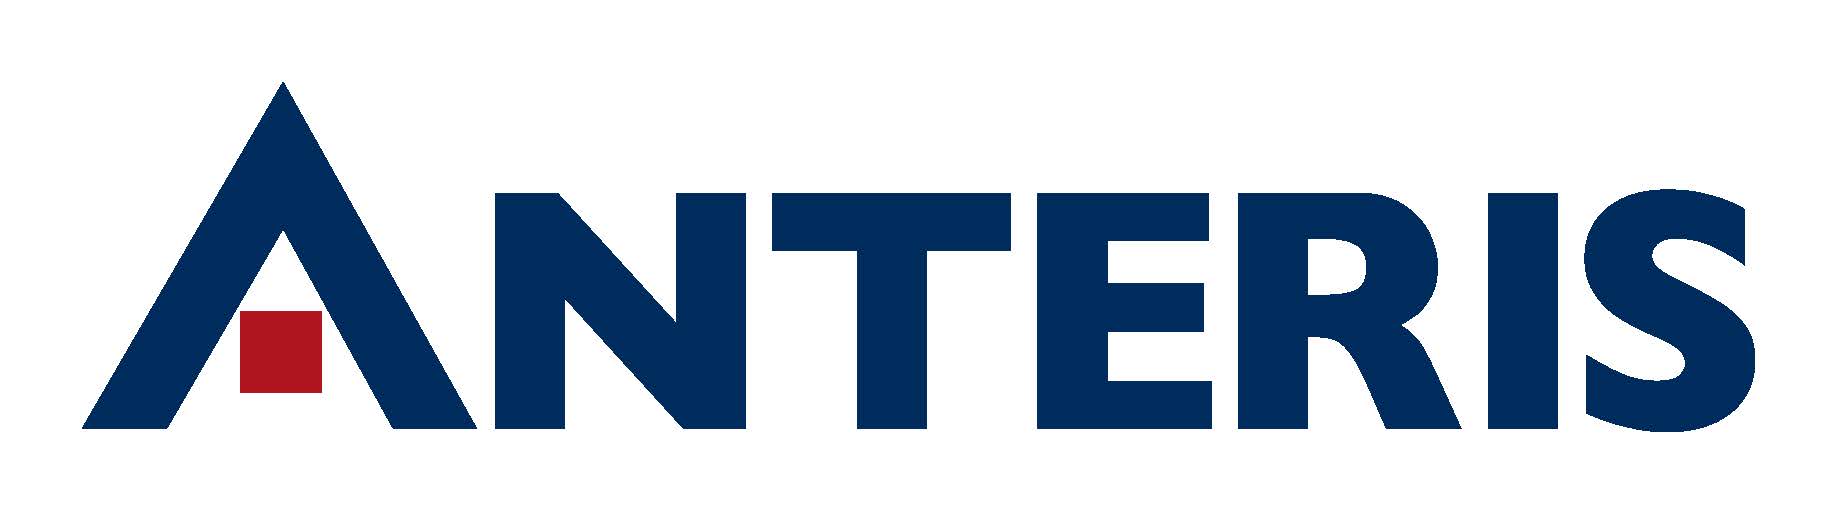 Anteris logo